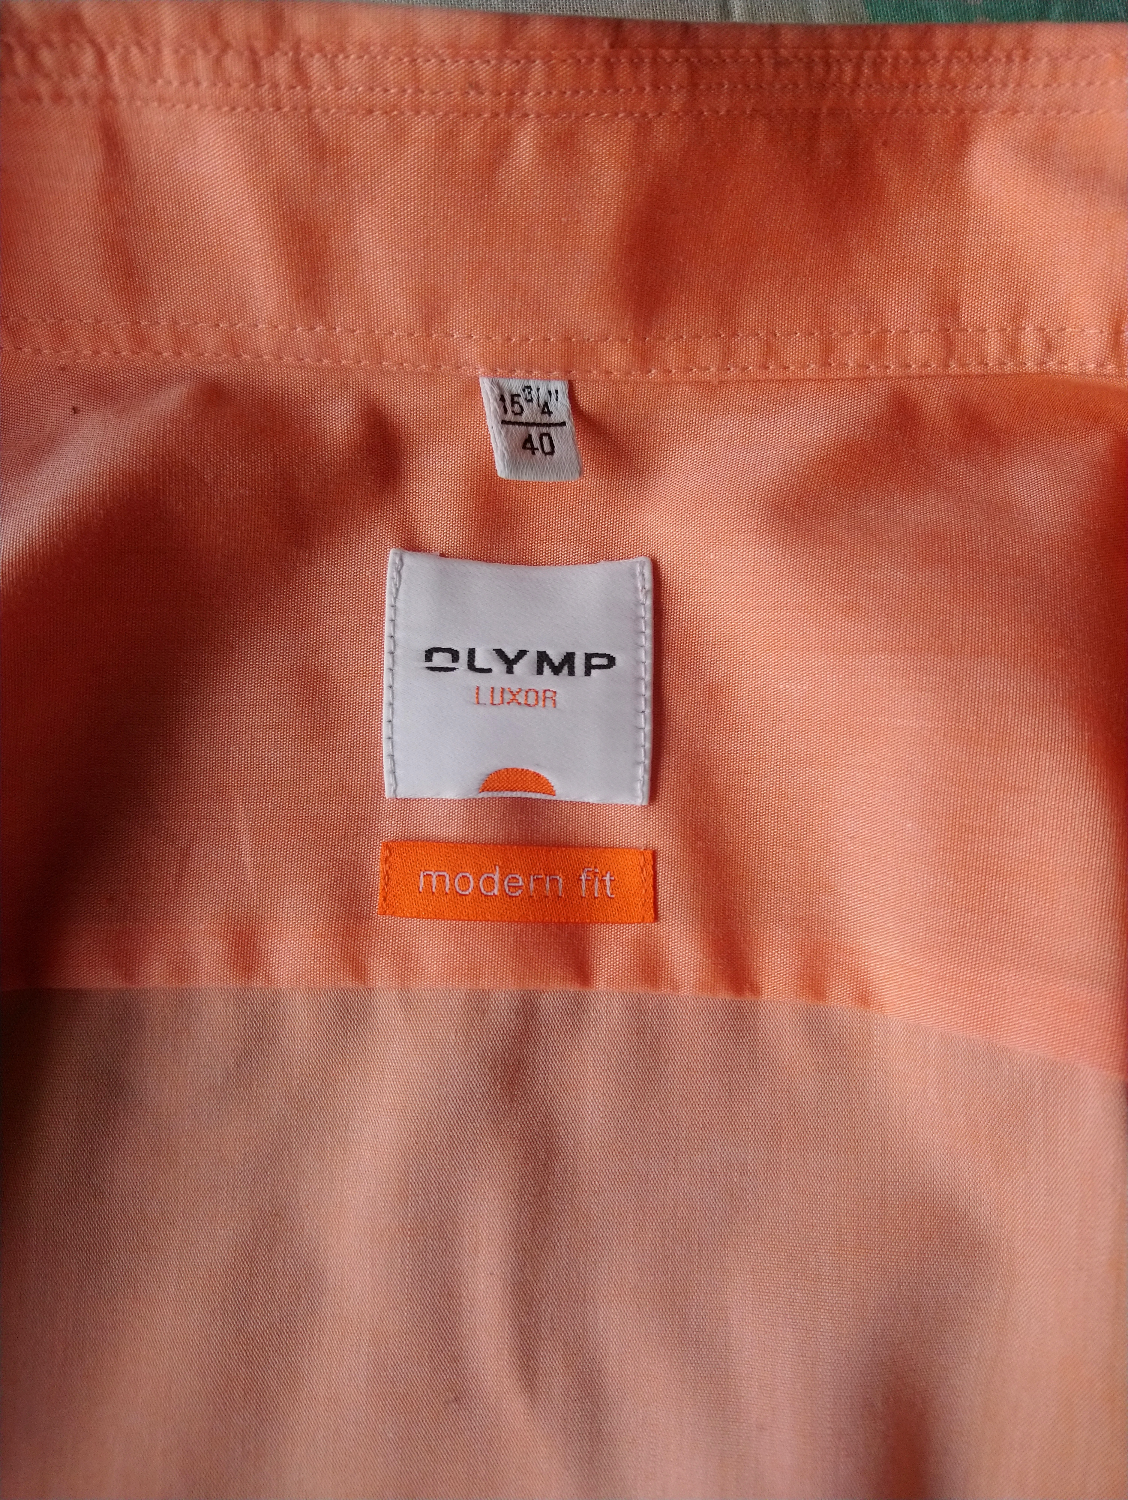 Camisa Olymp Luxor. Naranja de color claro. Tamaño M. Moderno FIT.